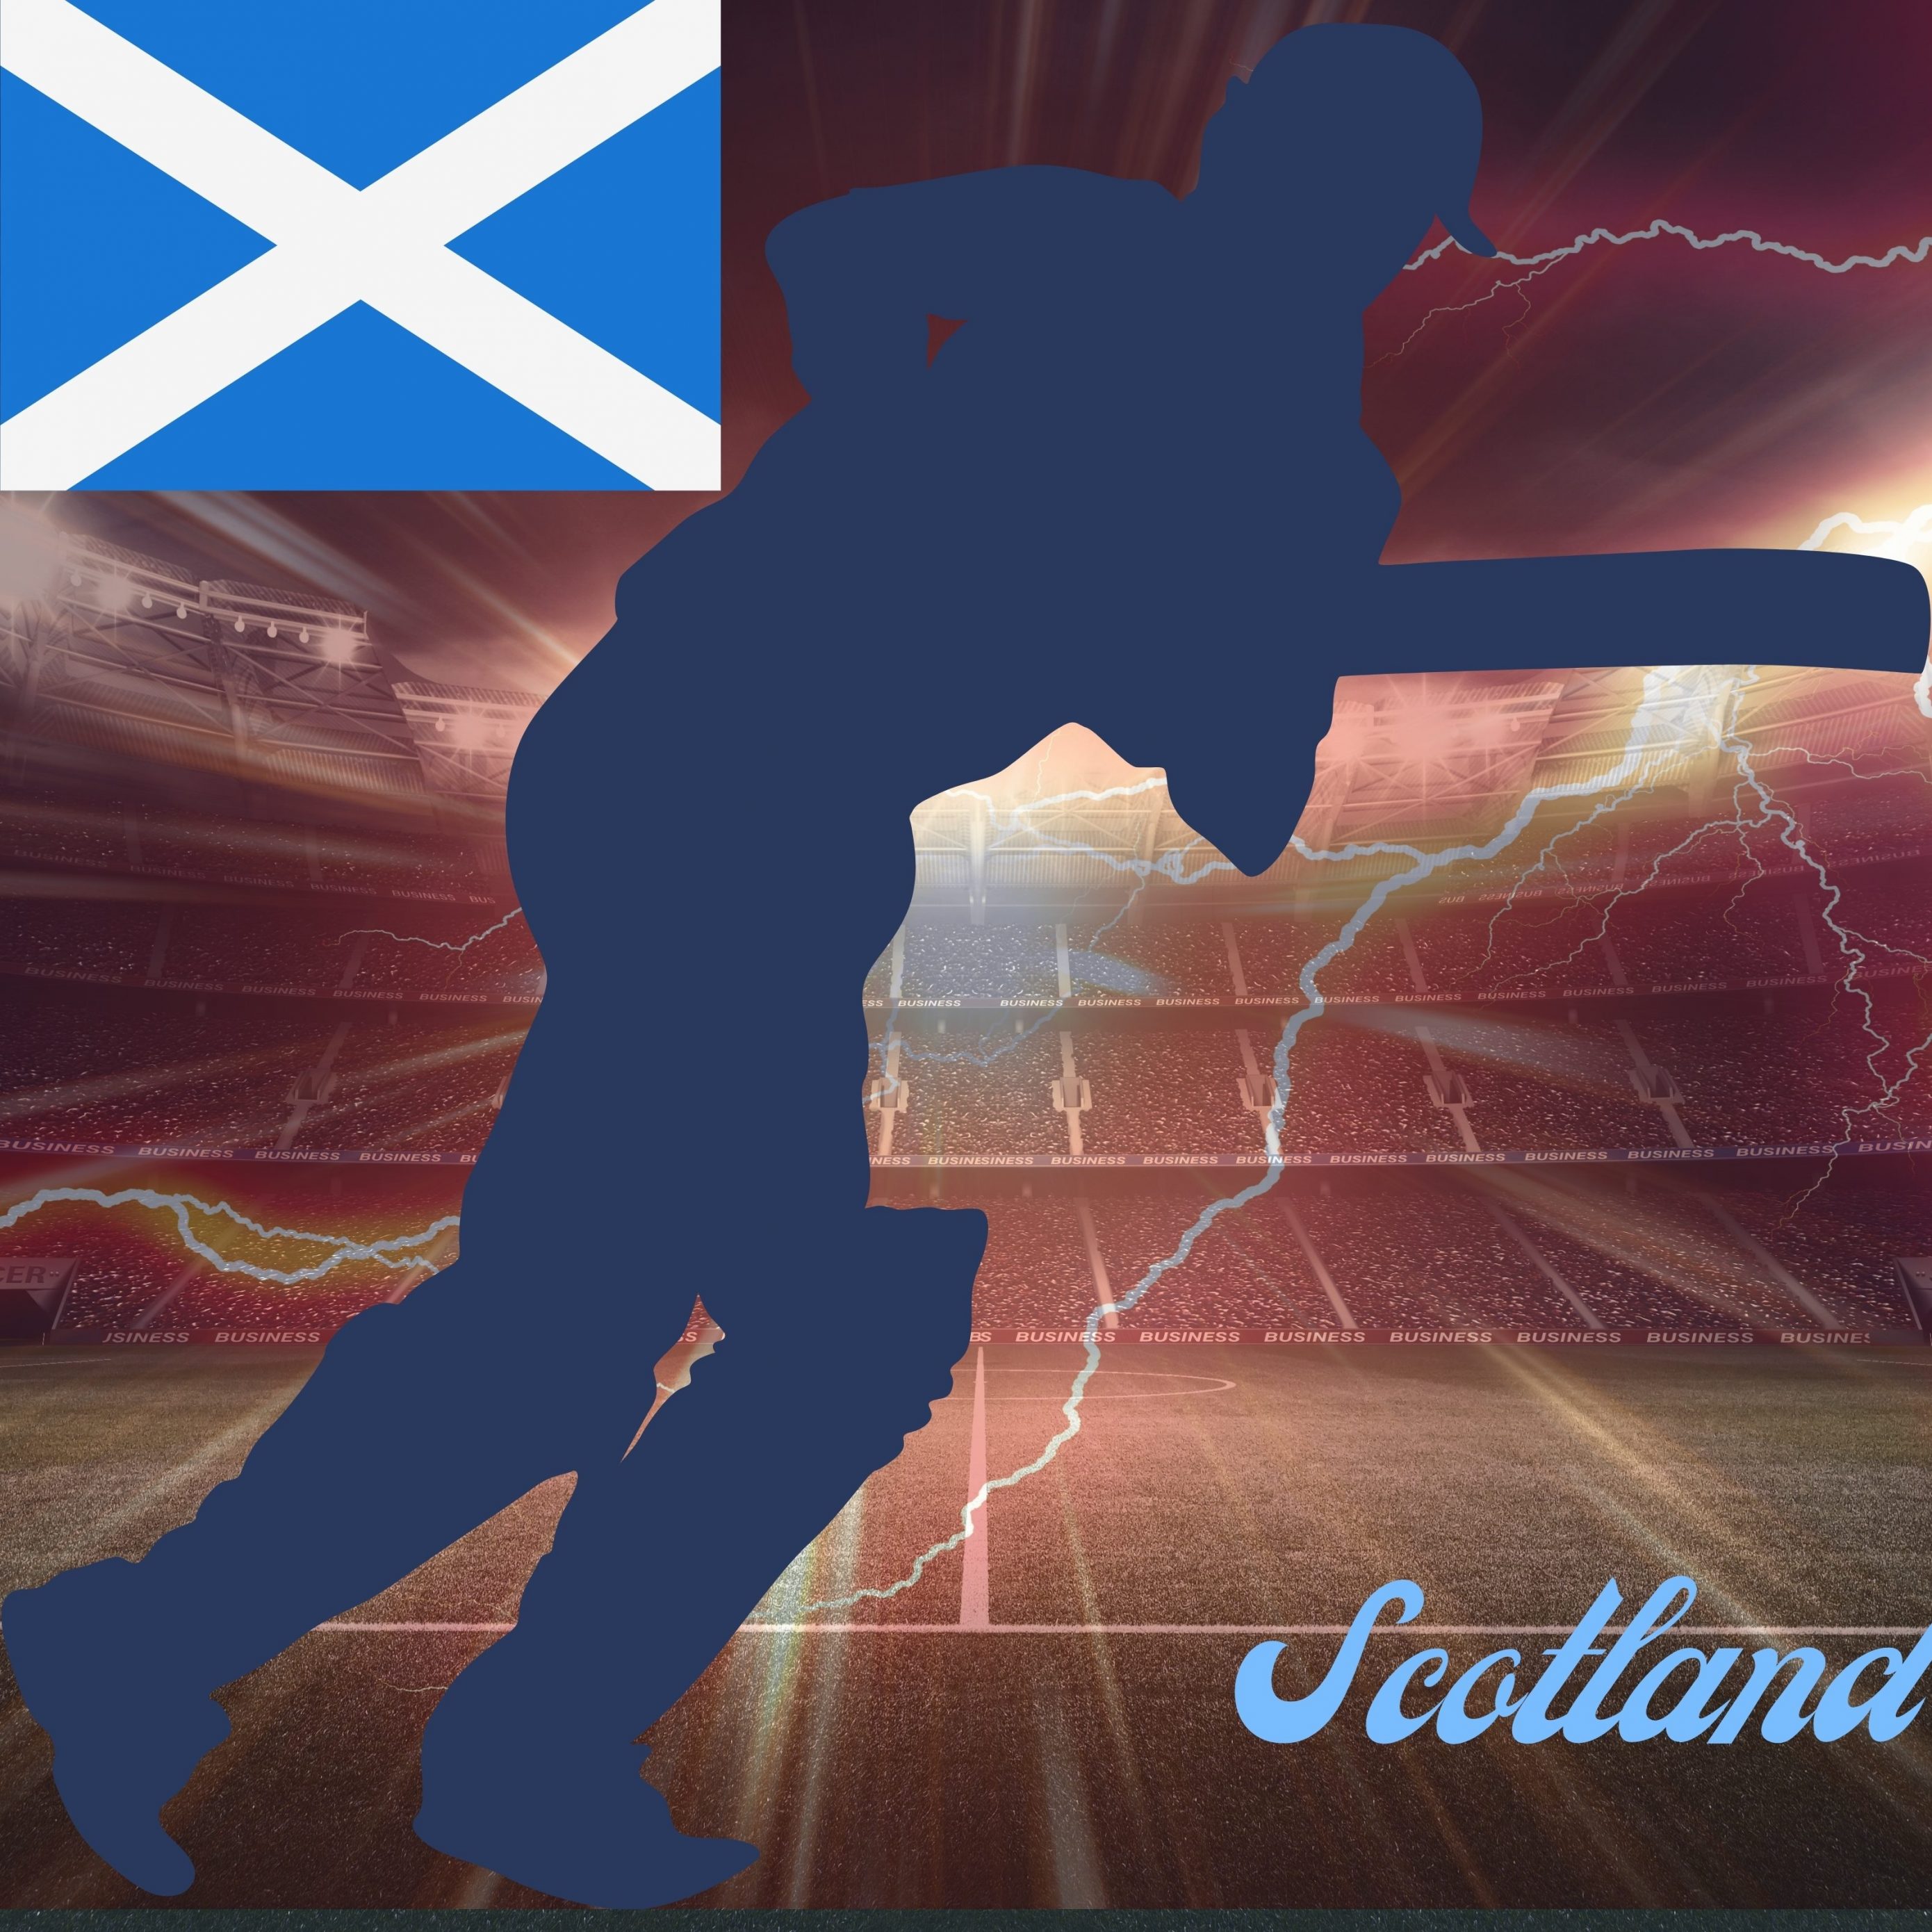 2780x2780 Parallax wallpaper 4k Scotland Cricket Stadium iPad Wallpaper 2780x2780 pixels resolution